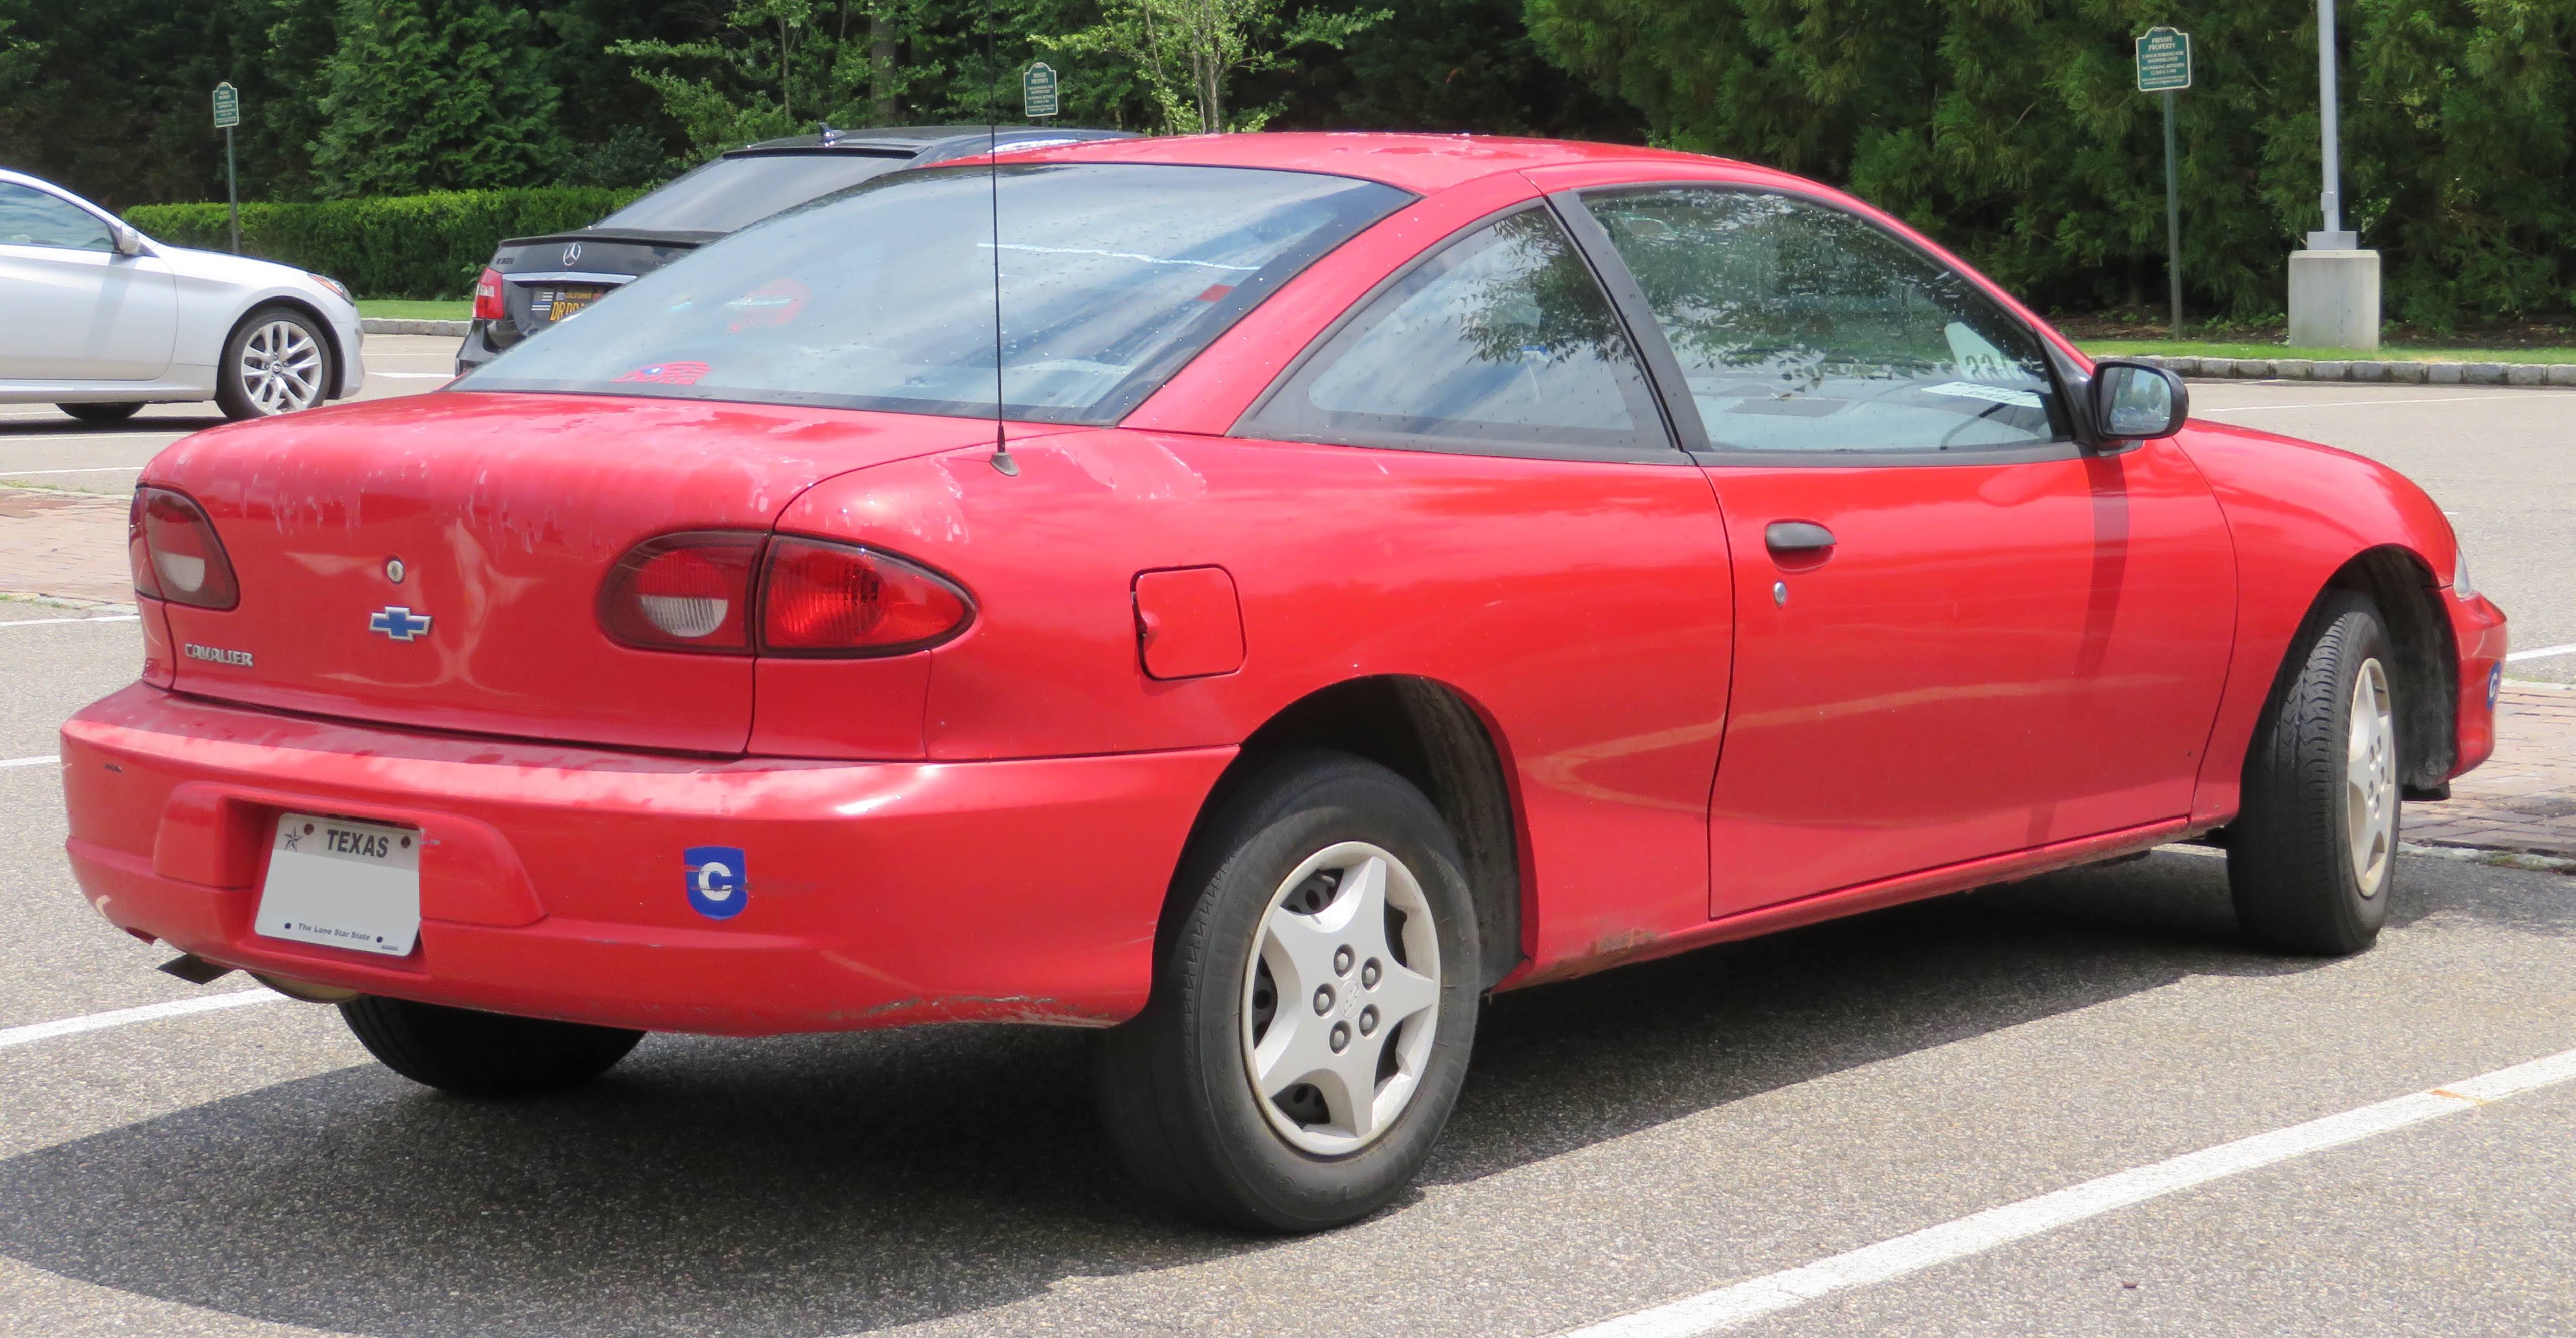 File:2000 Chevrolet Cavalier Coupe rear. 6.28.18.jpg - Wikimedia Commons